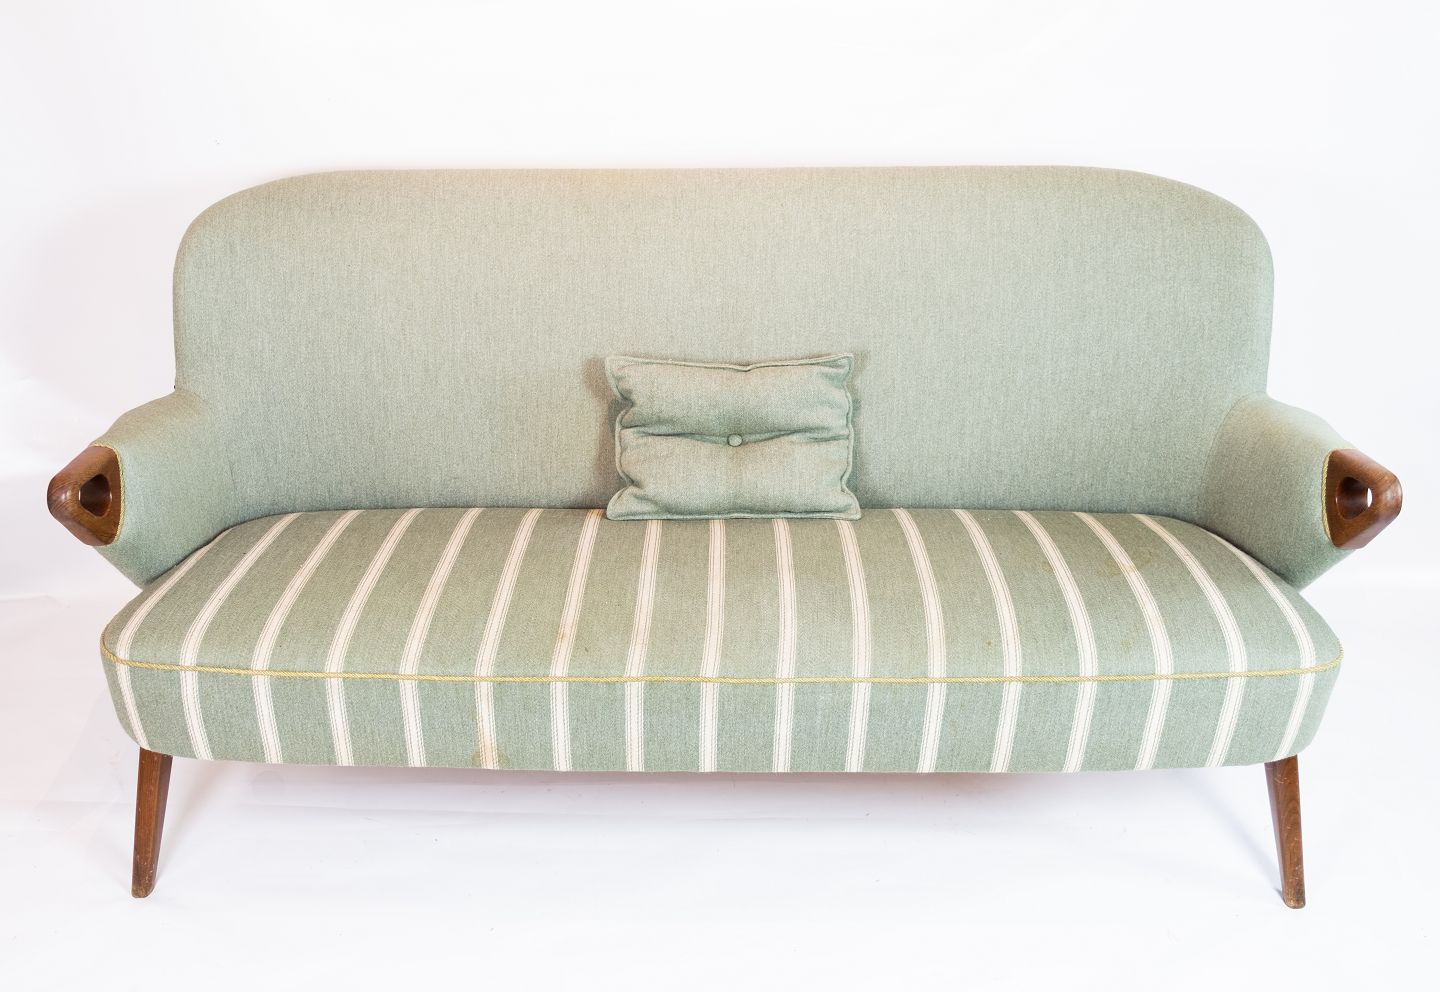 www.Antikvitet.net - personers sofa polstret med lysegrønt stribet stof med teak ben arme af design fra 1960e